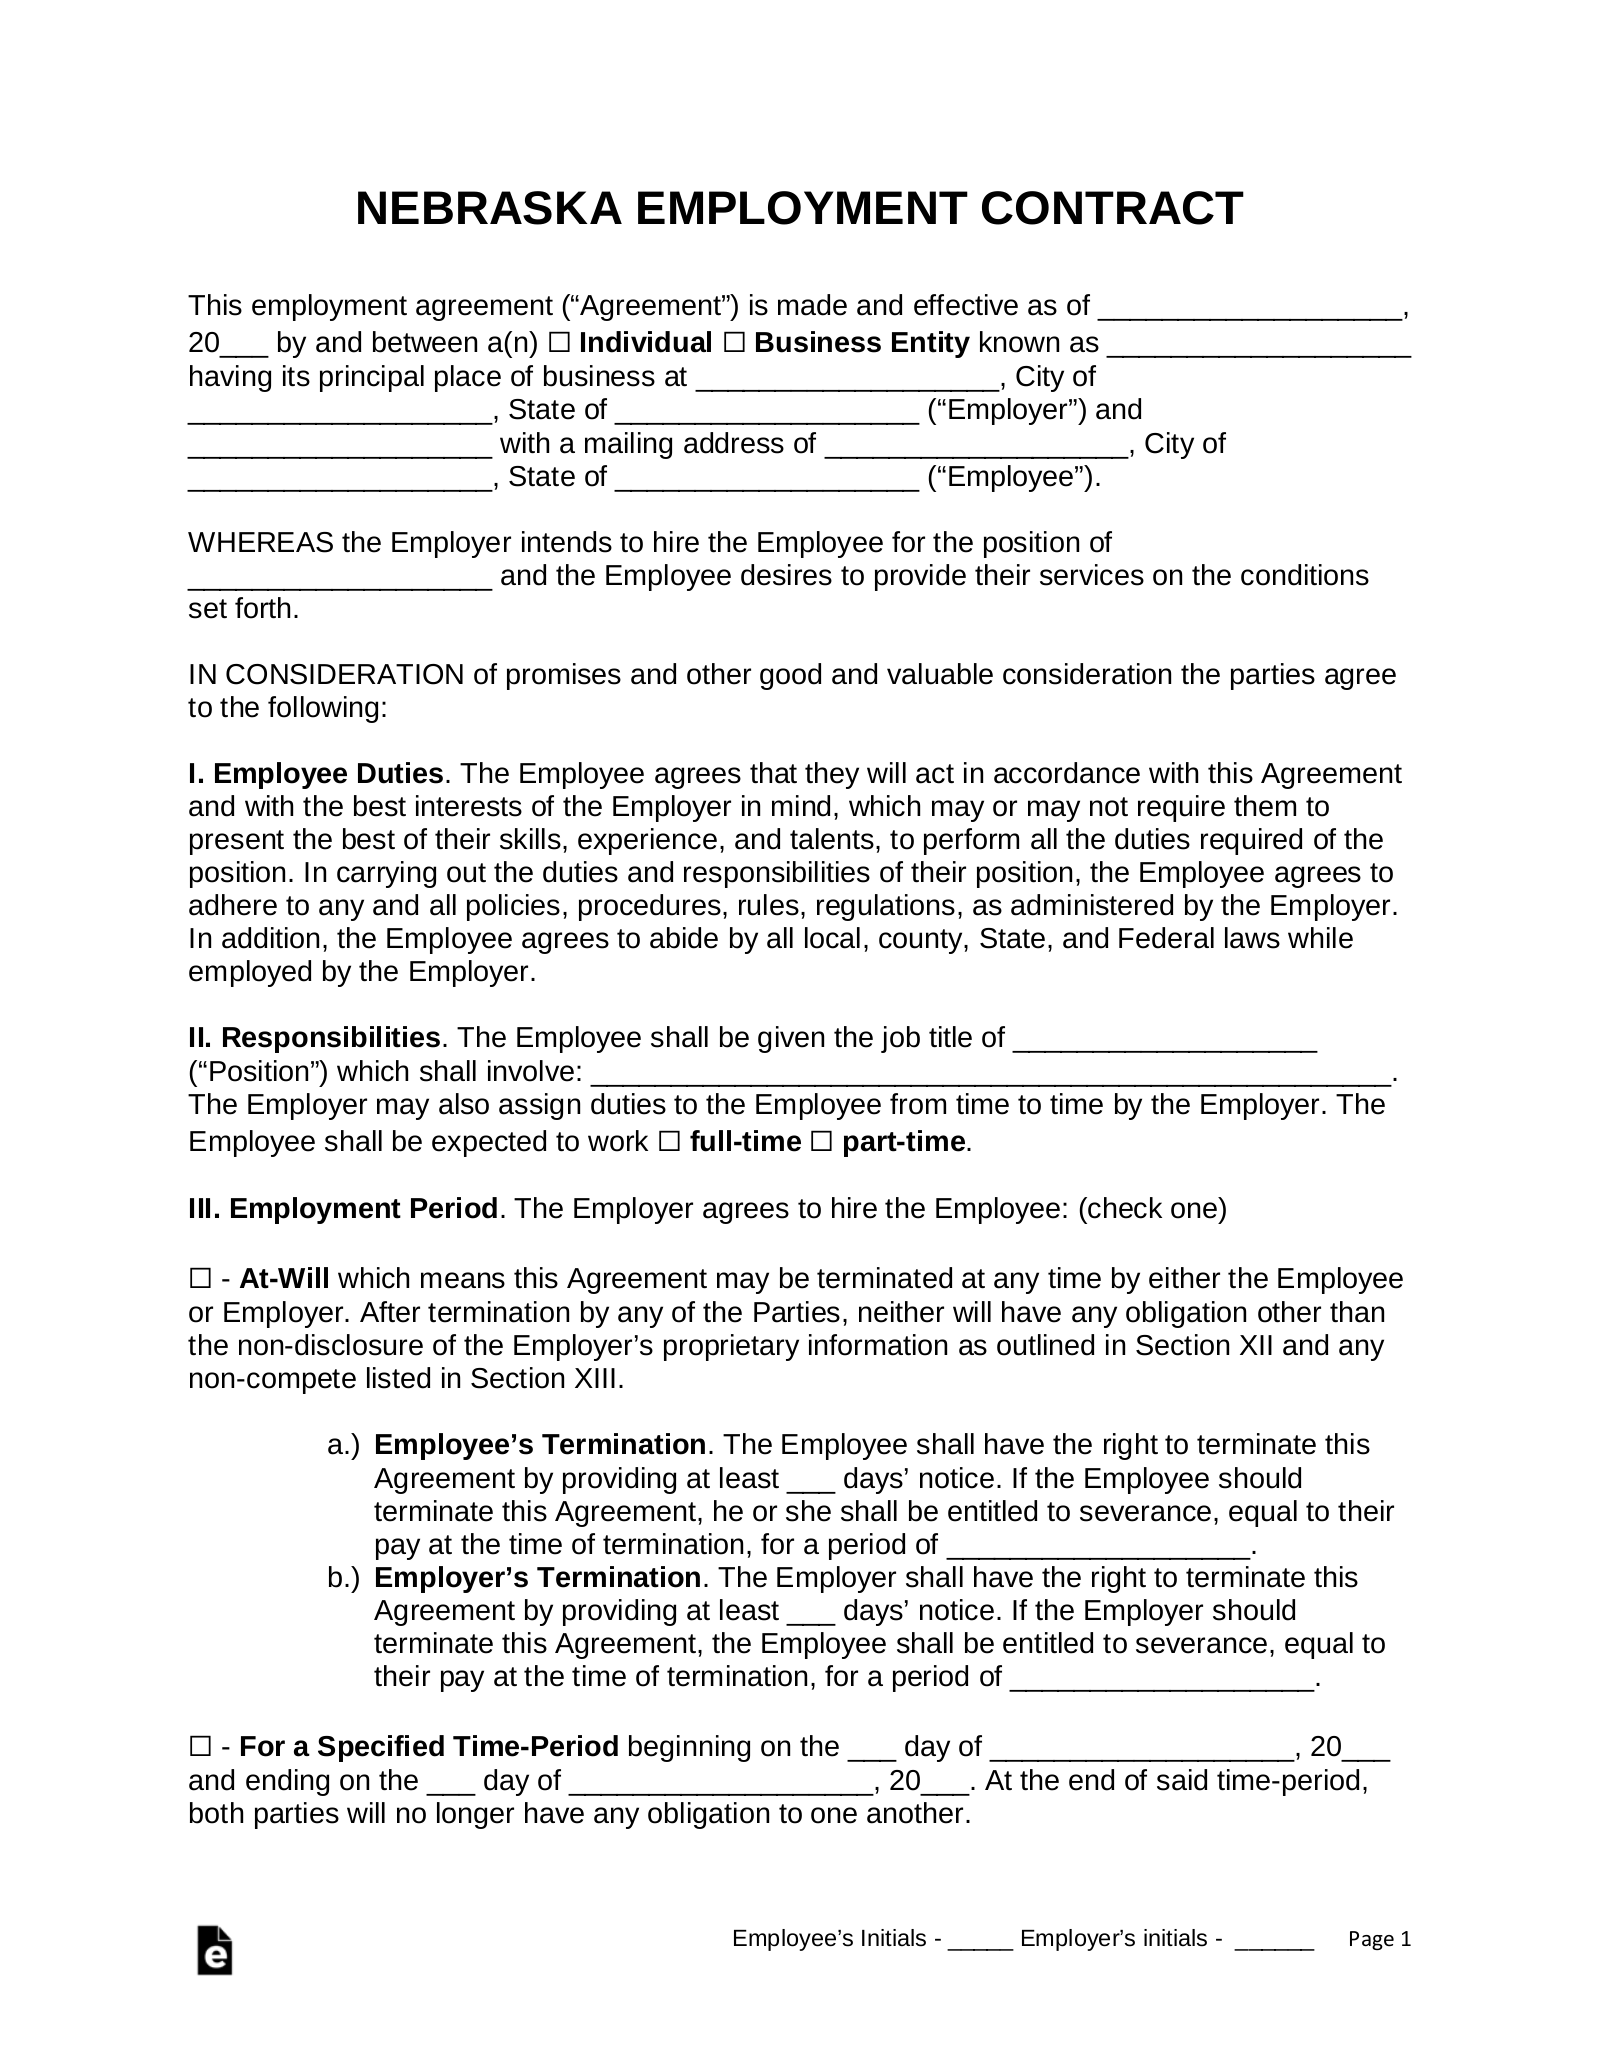 Nebraska Employment Contract Templates (4)